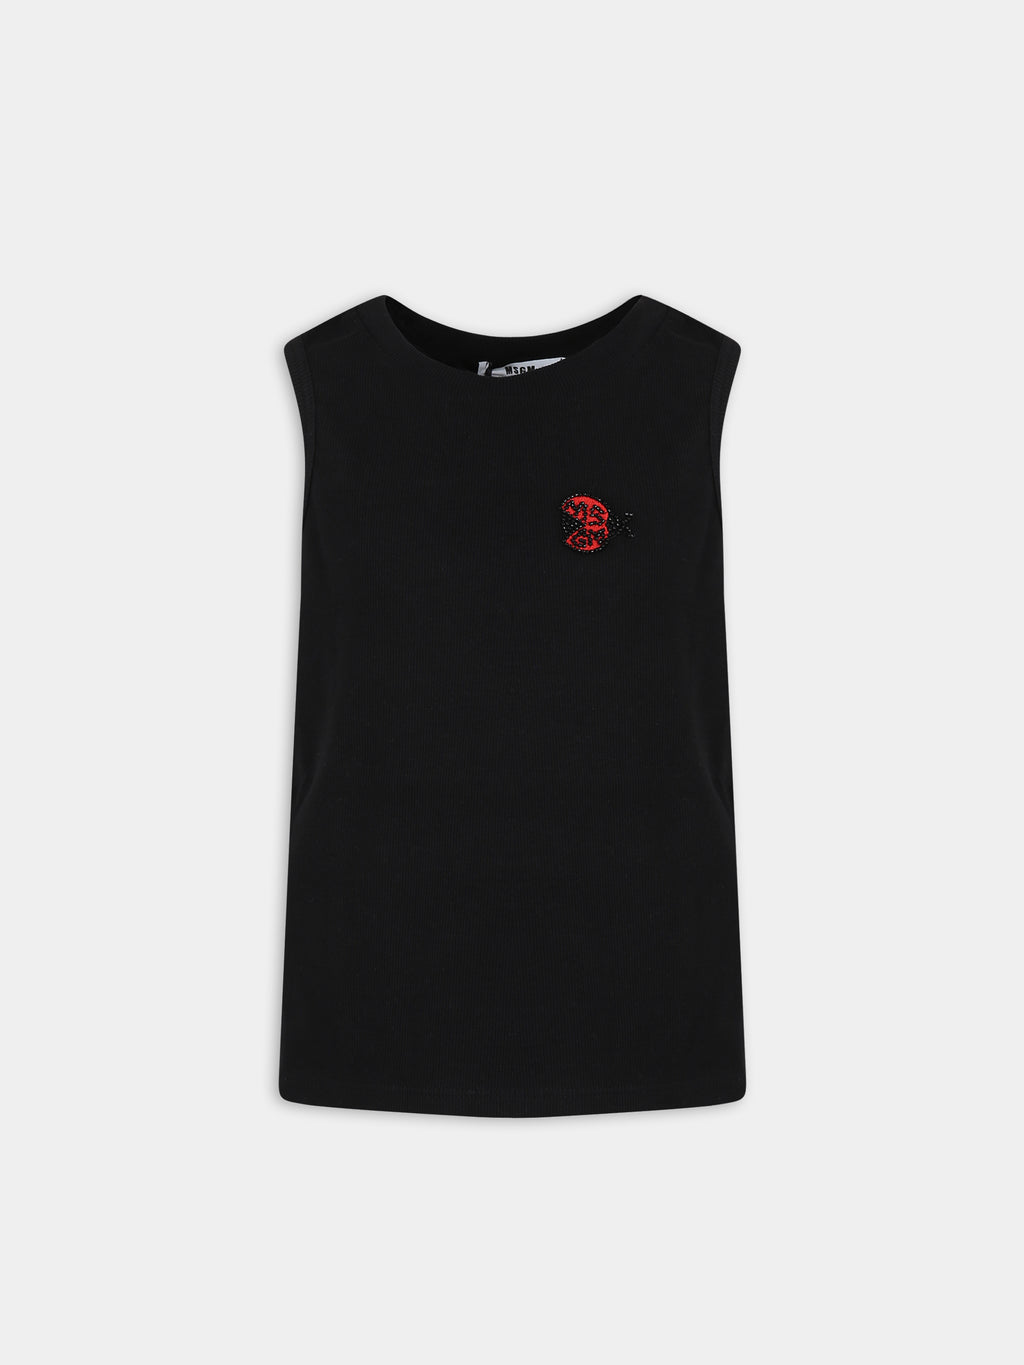 Black tank top for girl with logo and ladybug